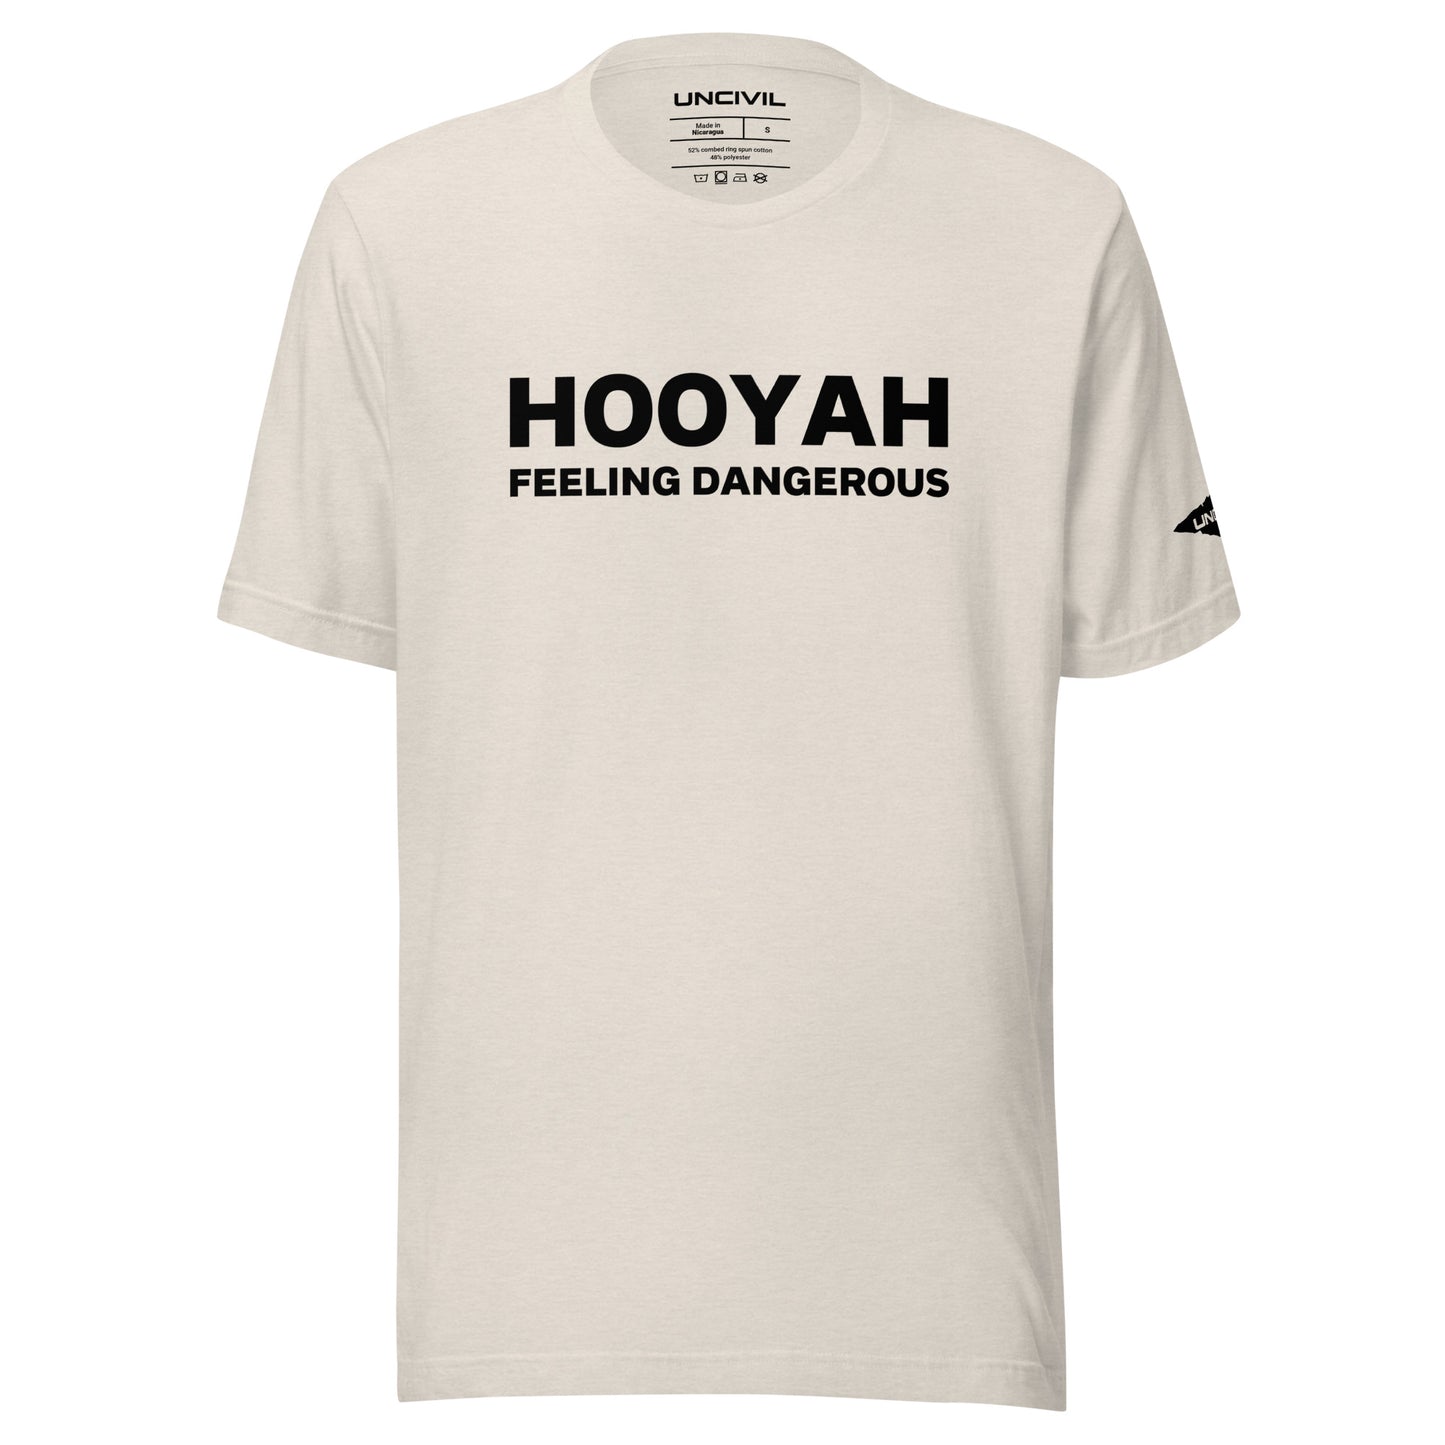 Hooyah, Feeling Dangerous shirt. The term "hooyah" is a U.S. Navy SEALs battle cry often used as motivation. Heather Dust unisex t-shirt.